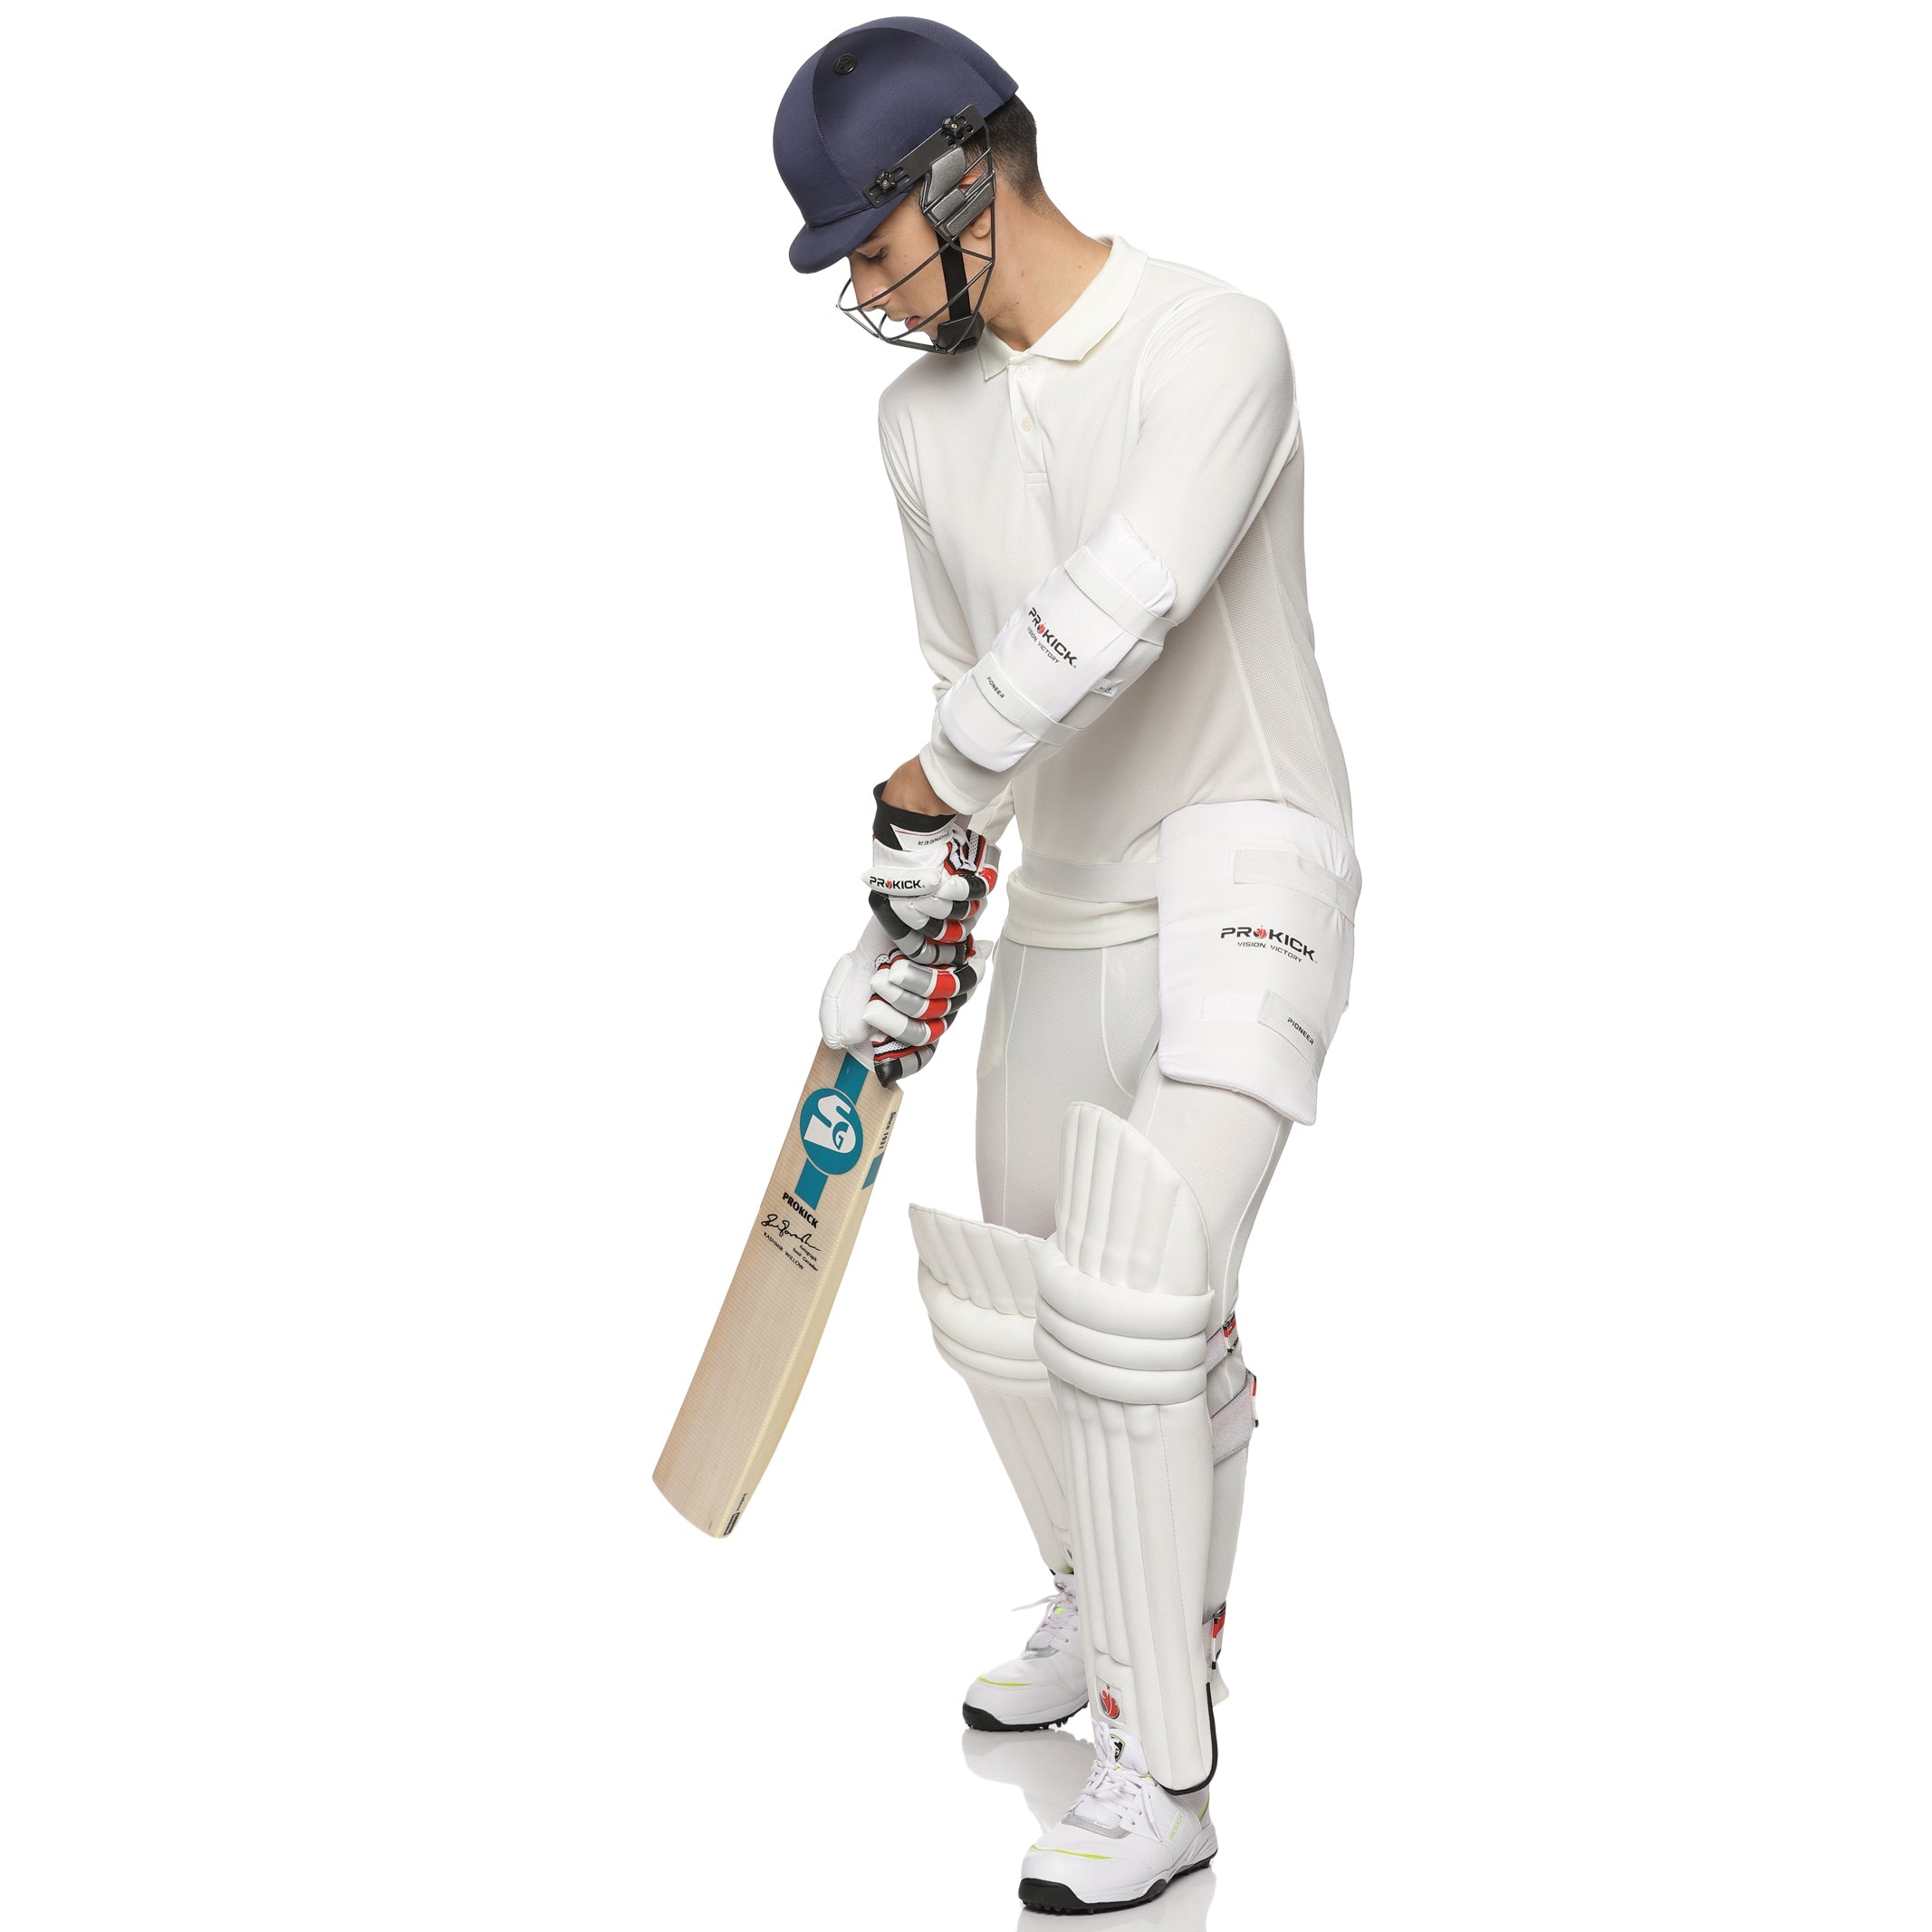 Cricket Clothes Archives - Cricket Company